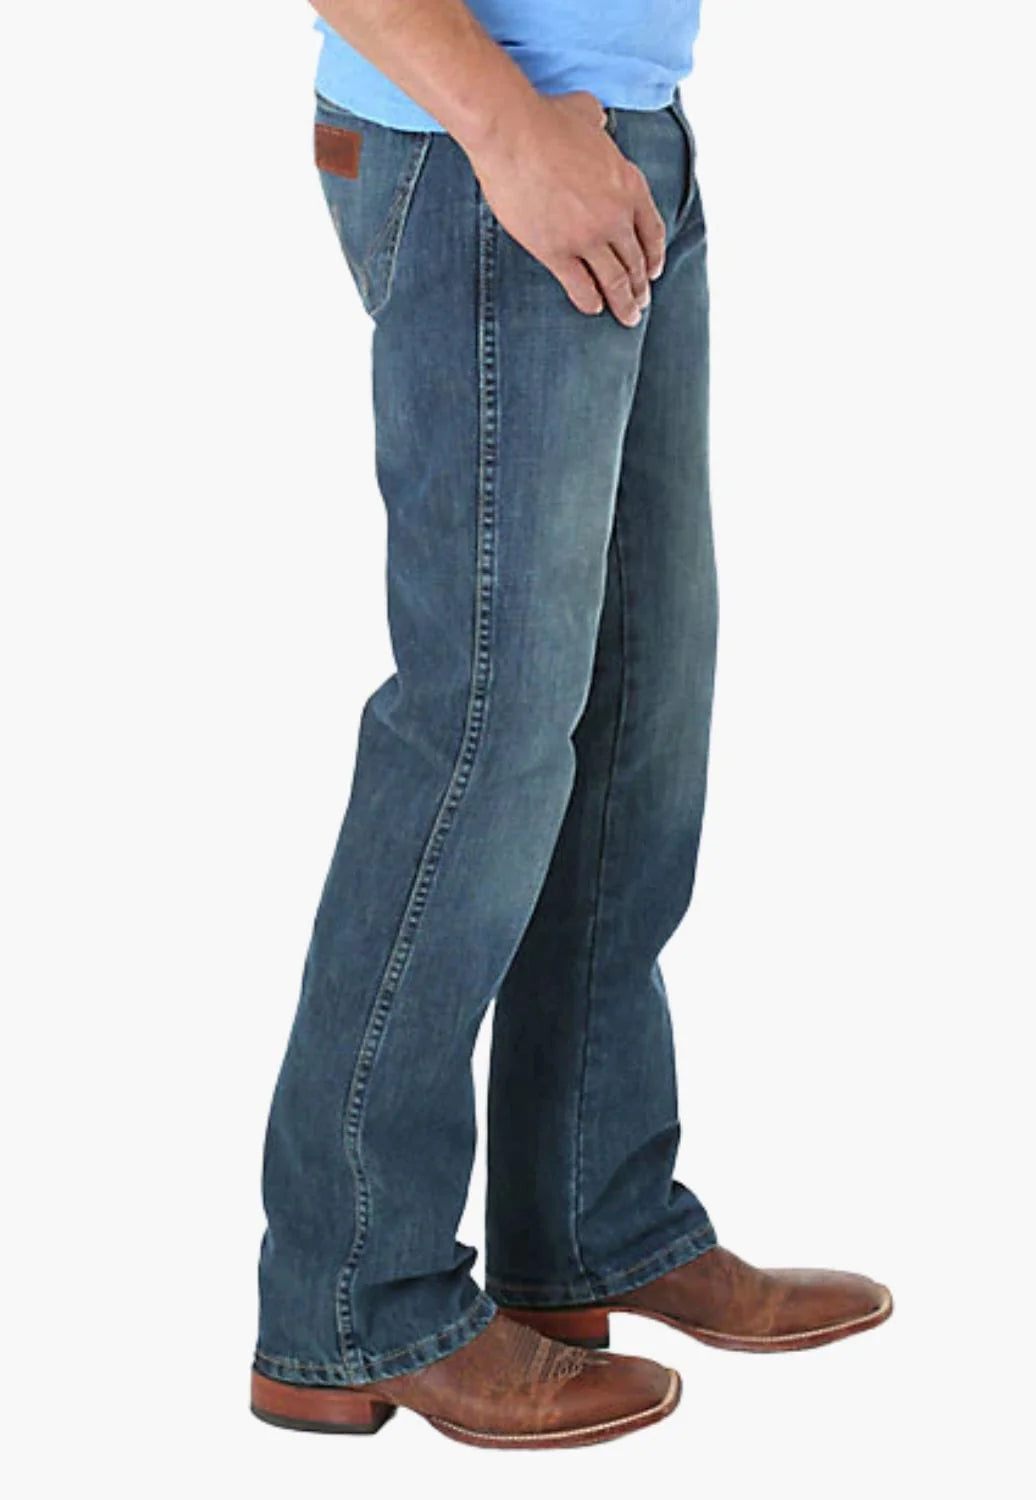 Wrangler - Mens River Wash Retro Jeans